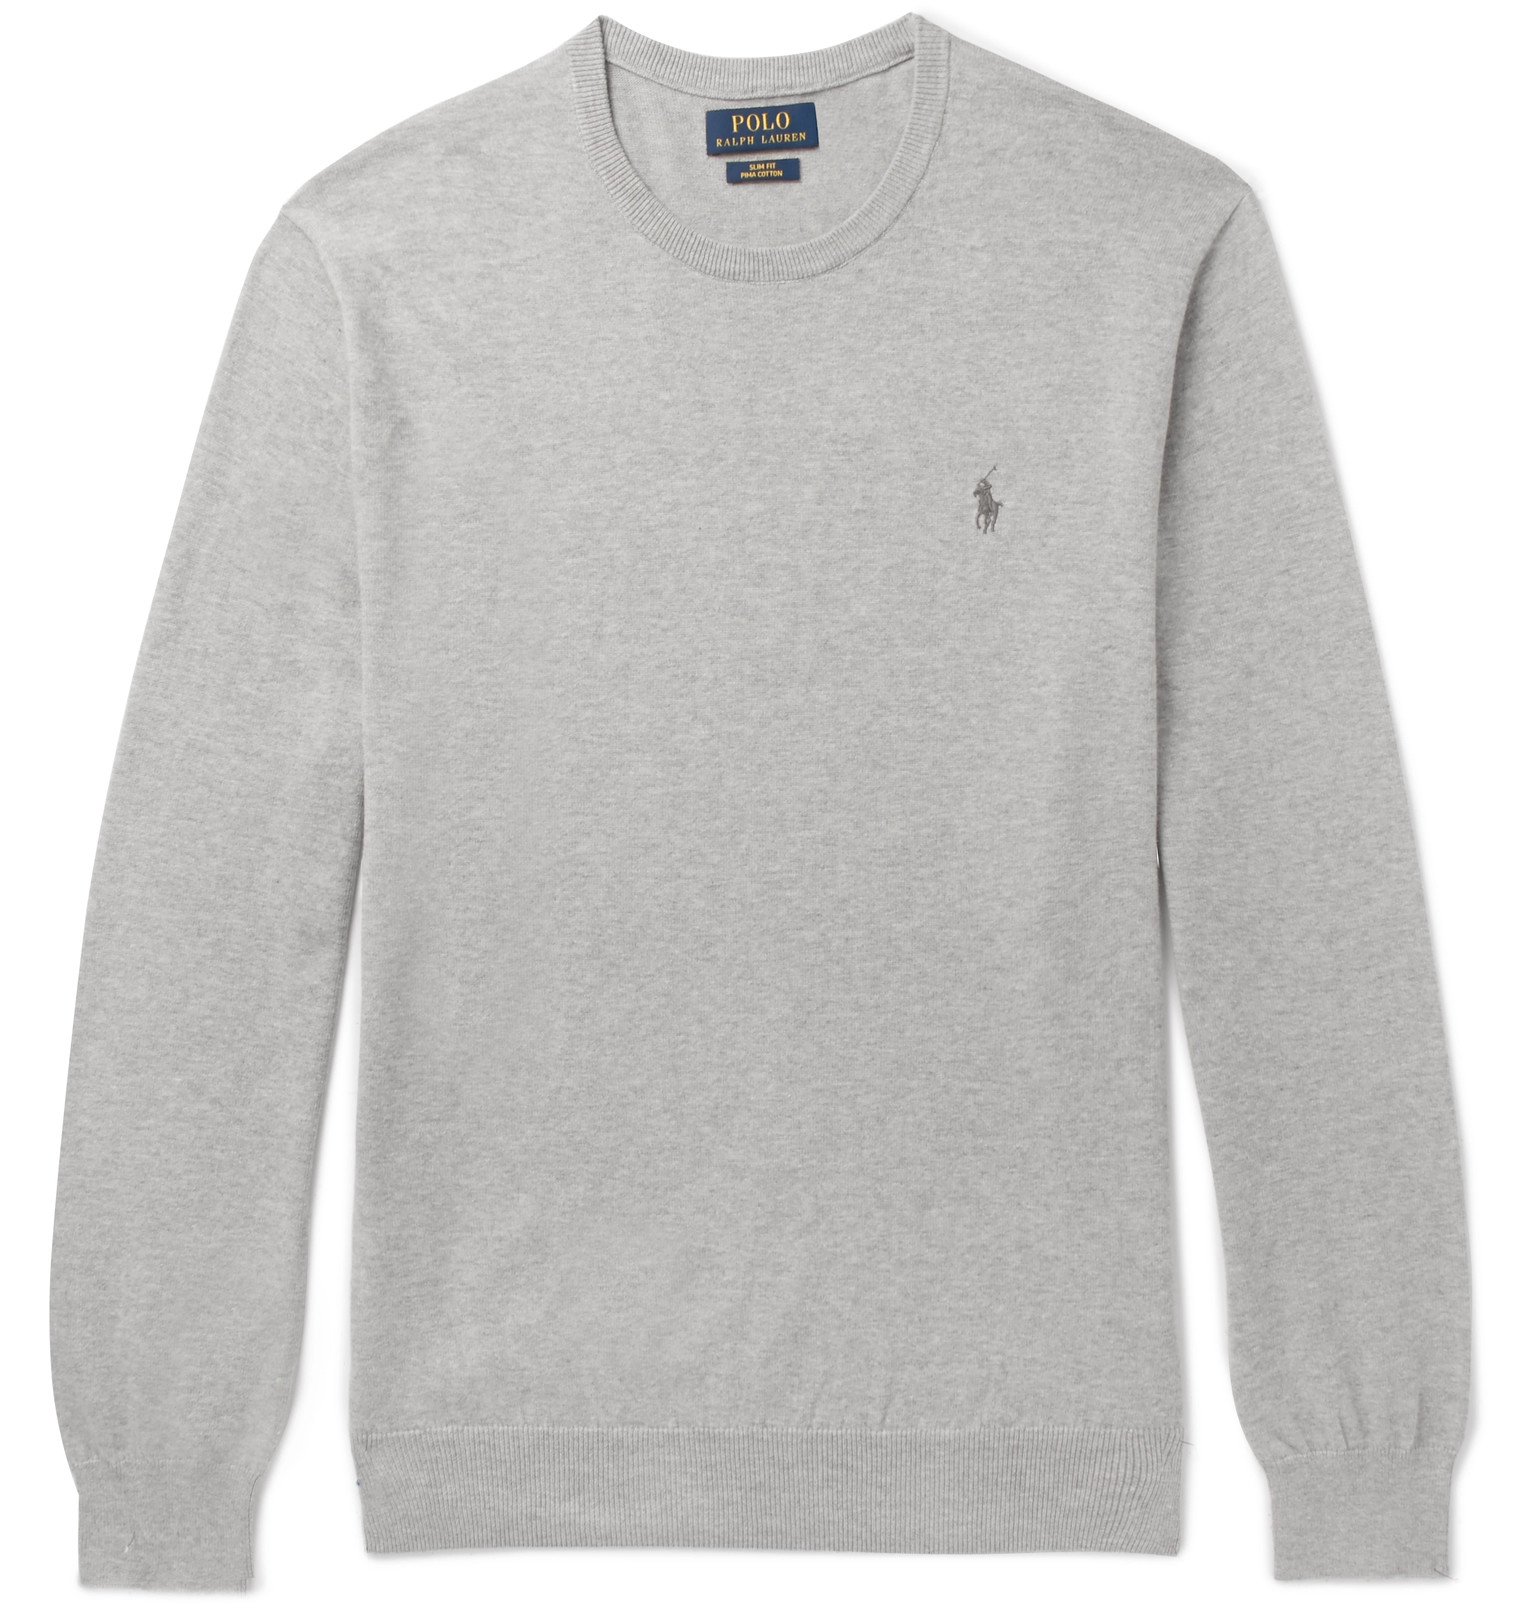 polo ralph lauren sweater grey